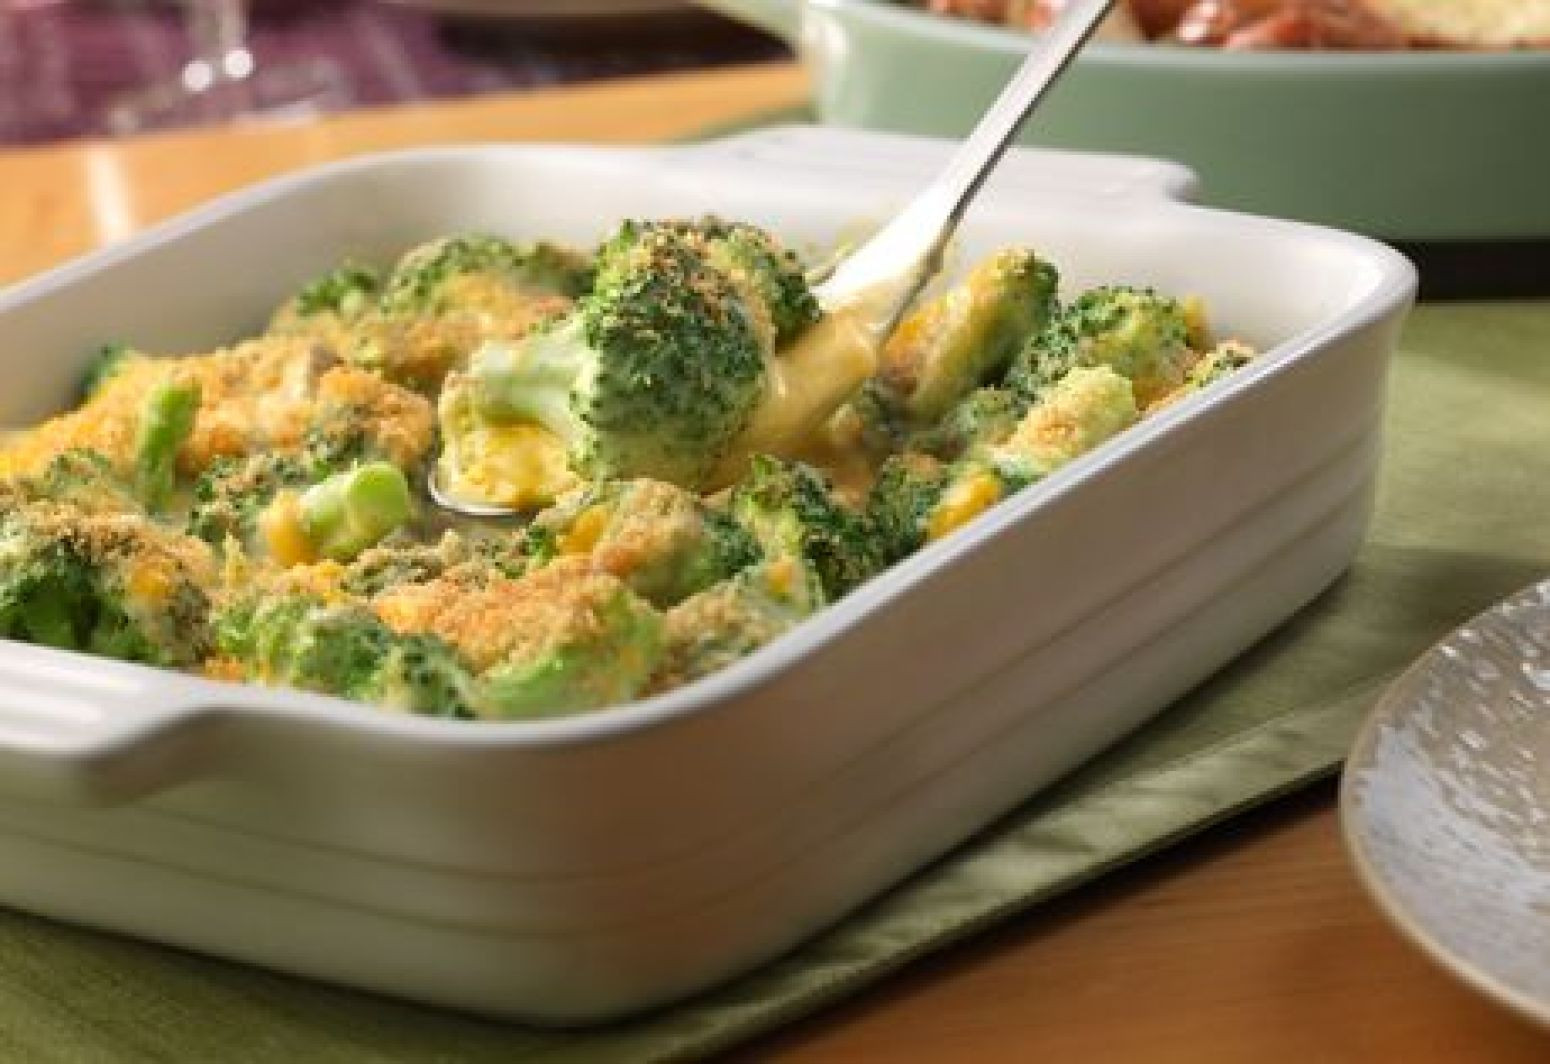 Campbells Chicken And Broccoli Casserole
 Campbell s Broccoli& Cheese Casserole Recipe 3